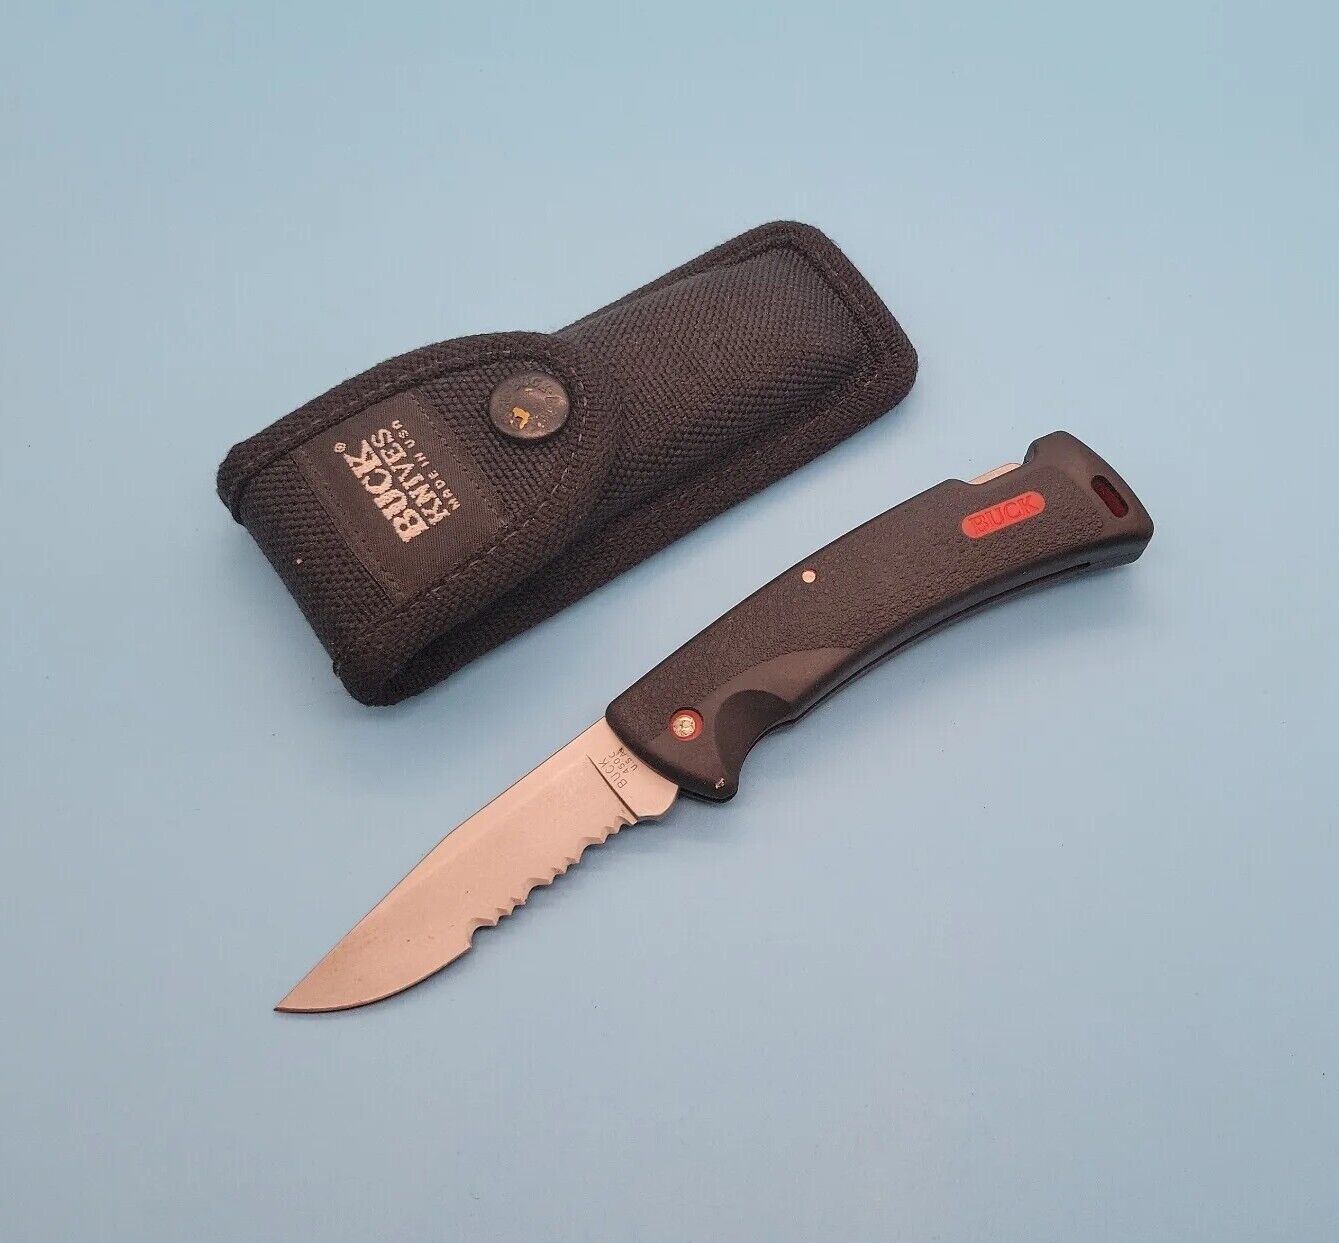 BUCK USA KNIVES 450C POCKET KNIFE DATED 1995 W/ BUCK SHEATH - LOCK BACK FOLDER